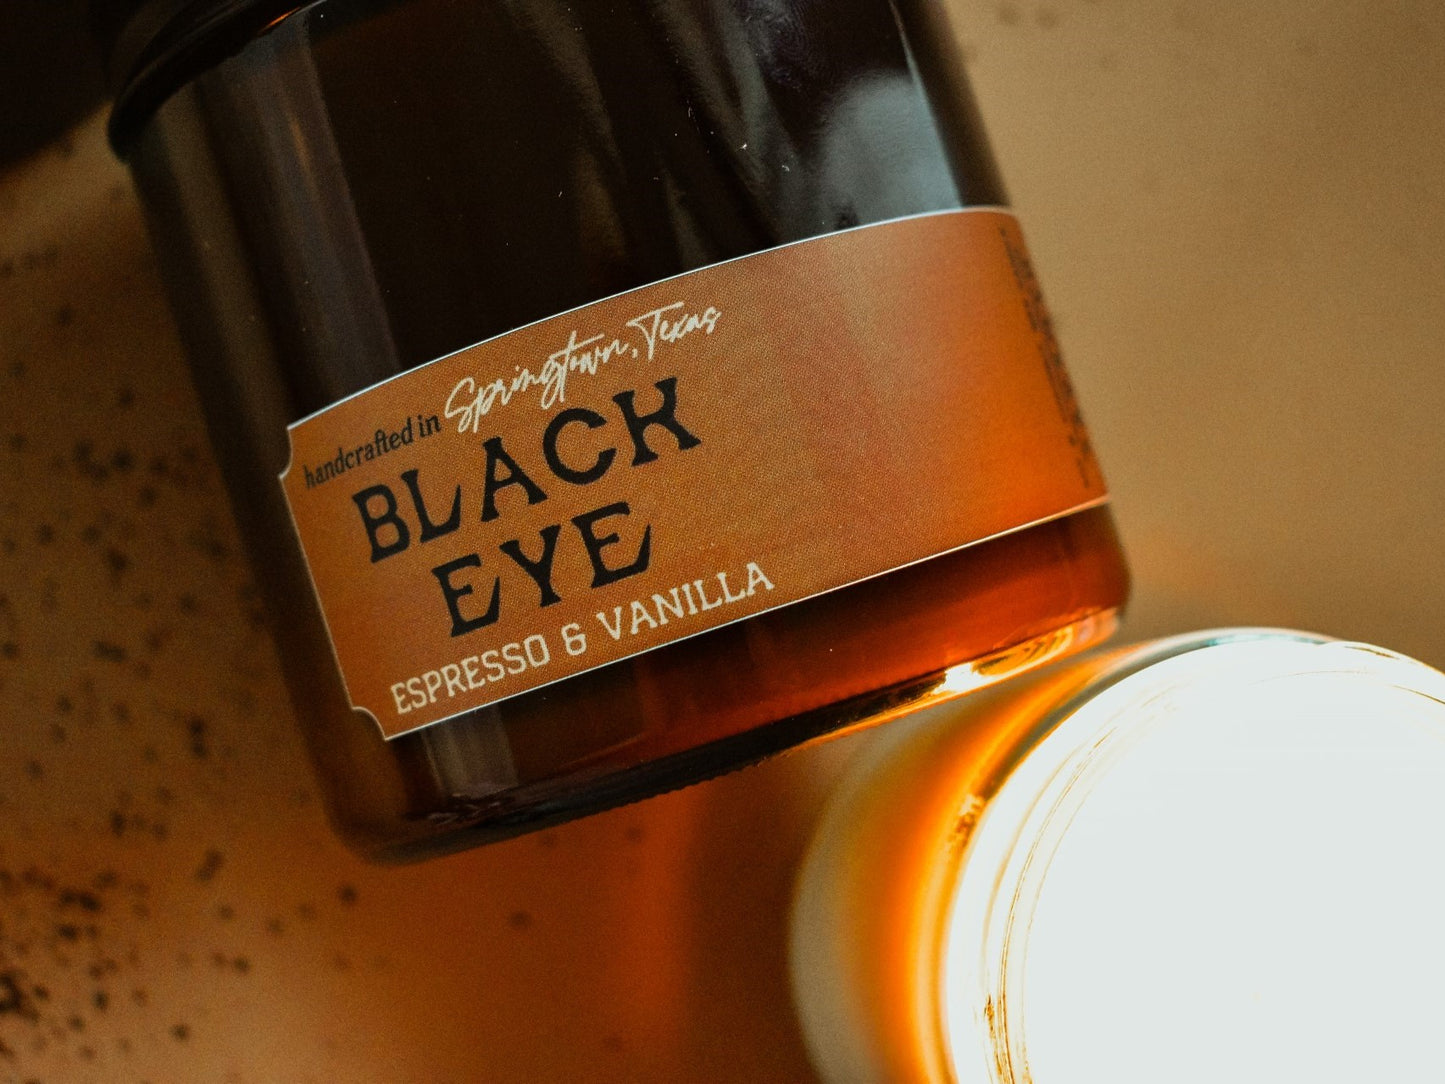 BLACK EYE - Espresso & Vanilla